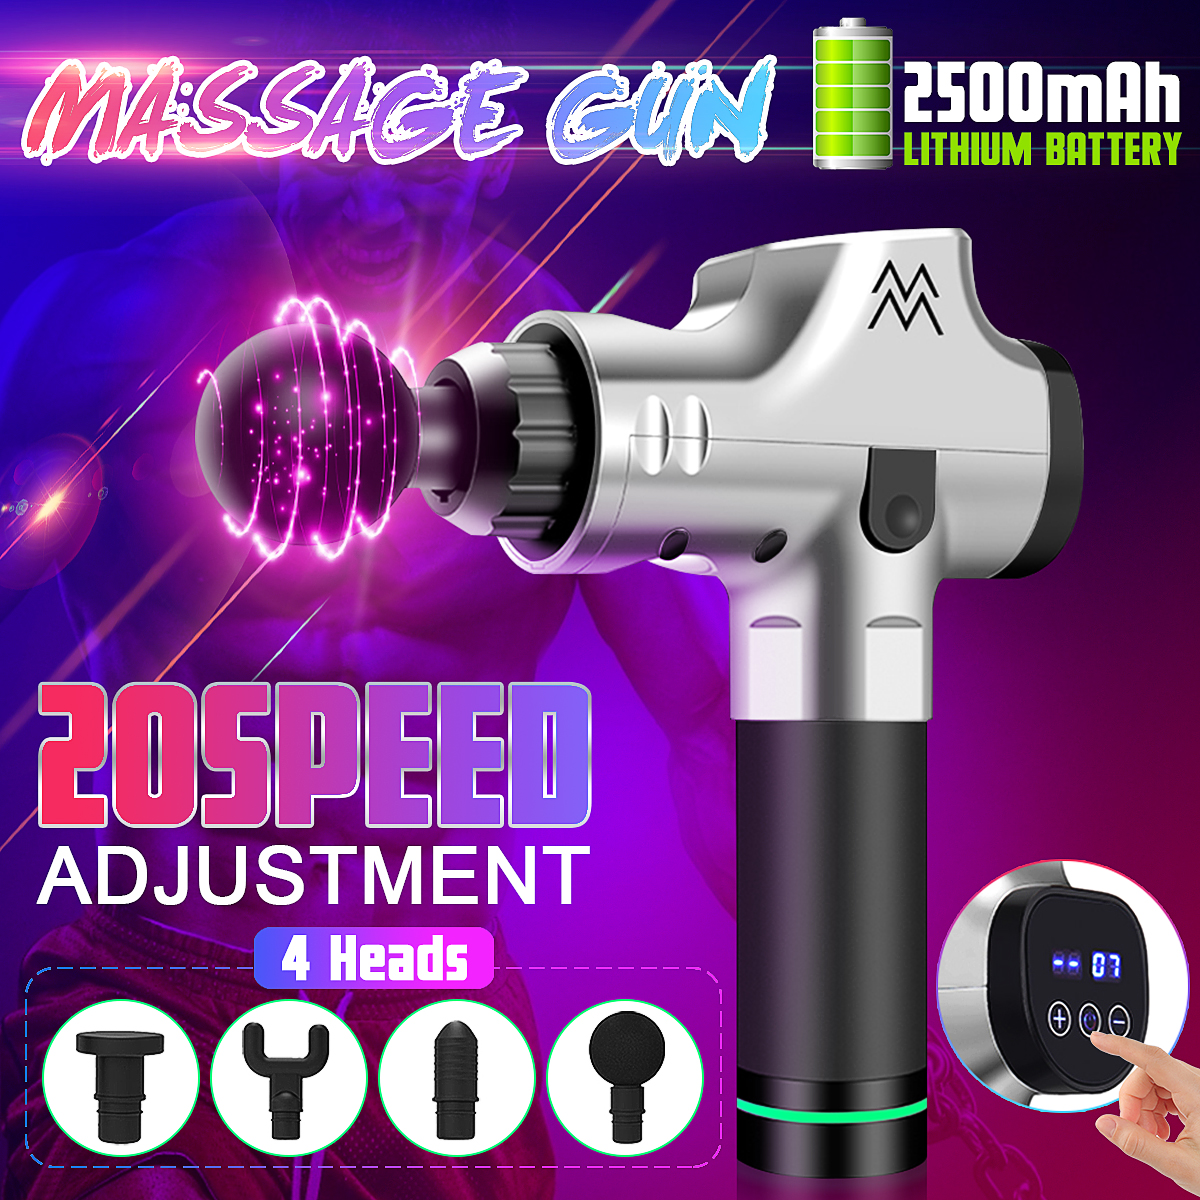 20-Speed-2500mAh-Electric-Massager-Handheld-Vibration-Massager-Device-with-4-Adjustable-Speed--4-Att-1561428-1